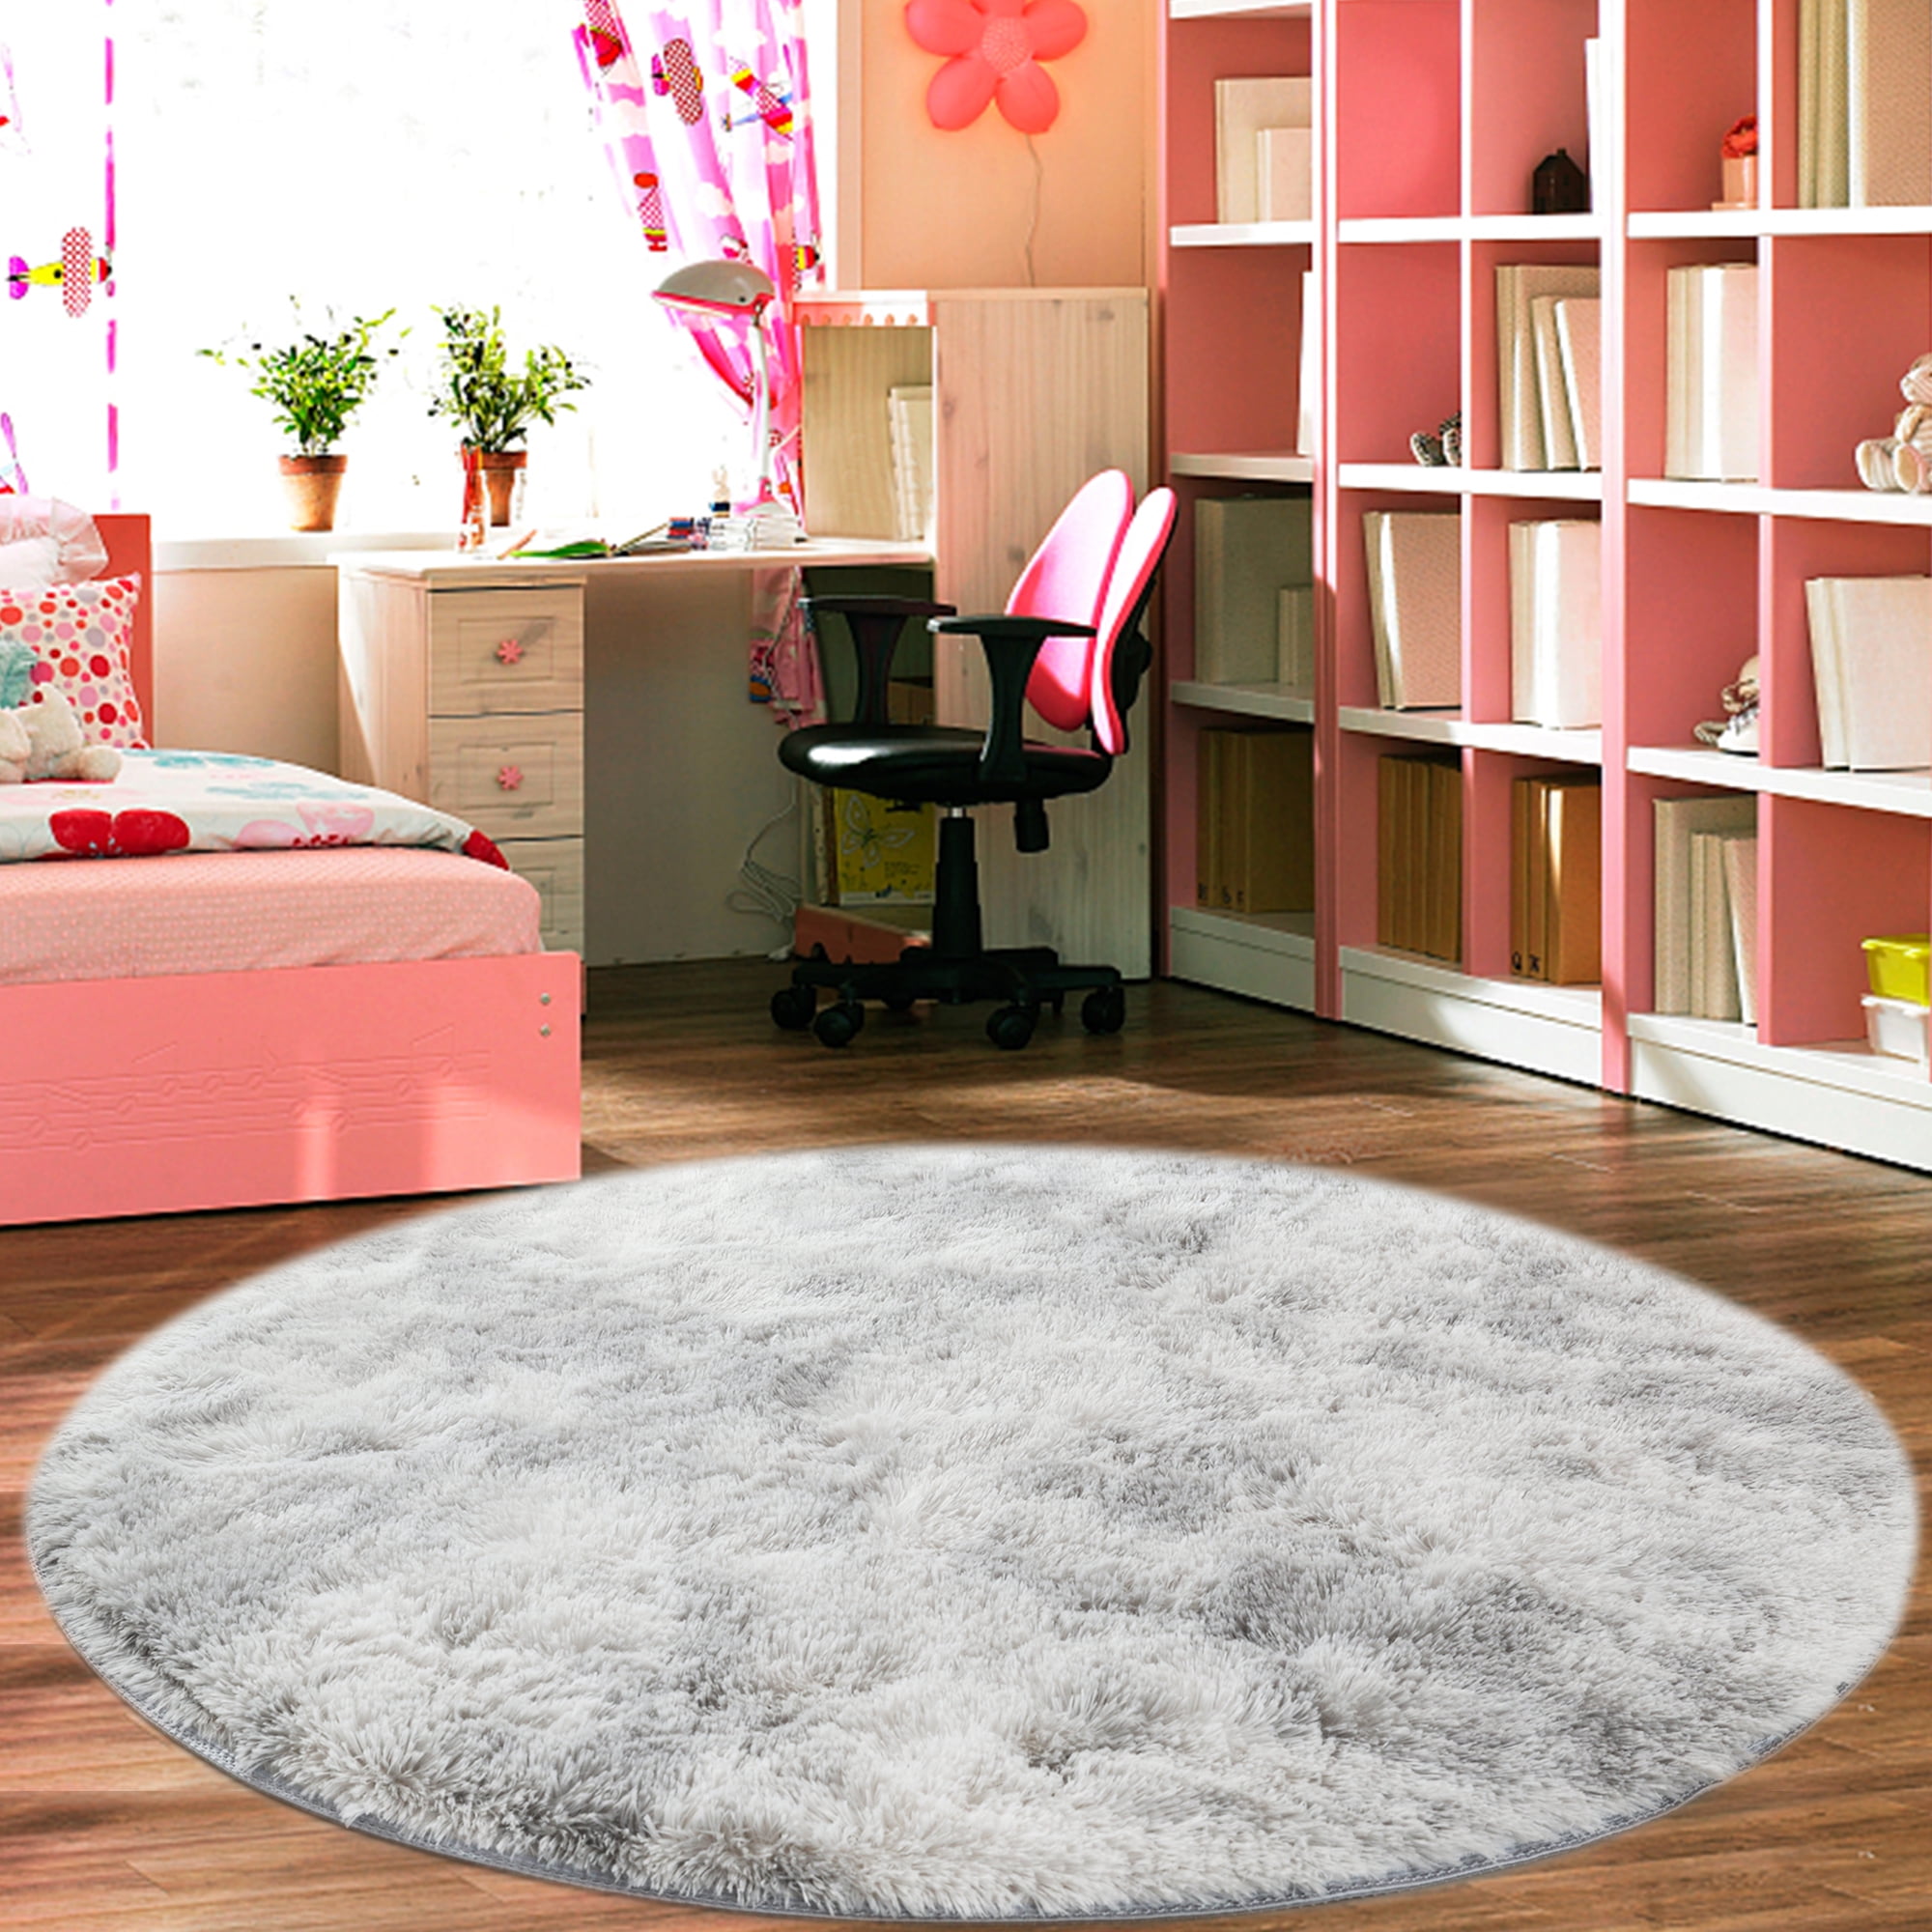 Round Fluffy Soft Area Rugs, Plush Carpet Circle Nursery Rug for